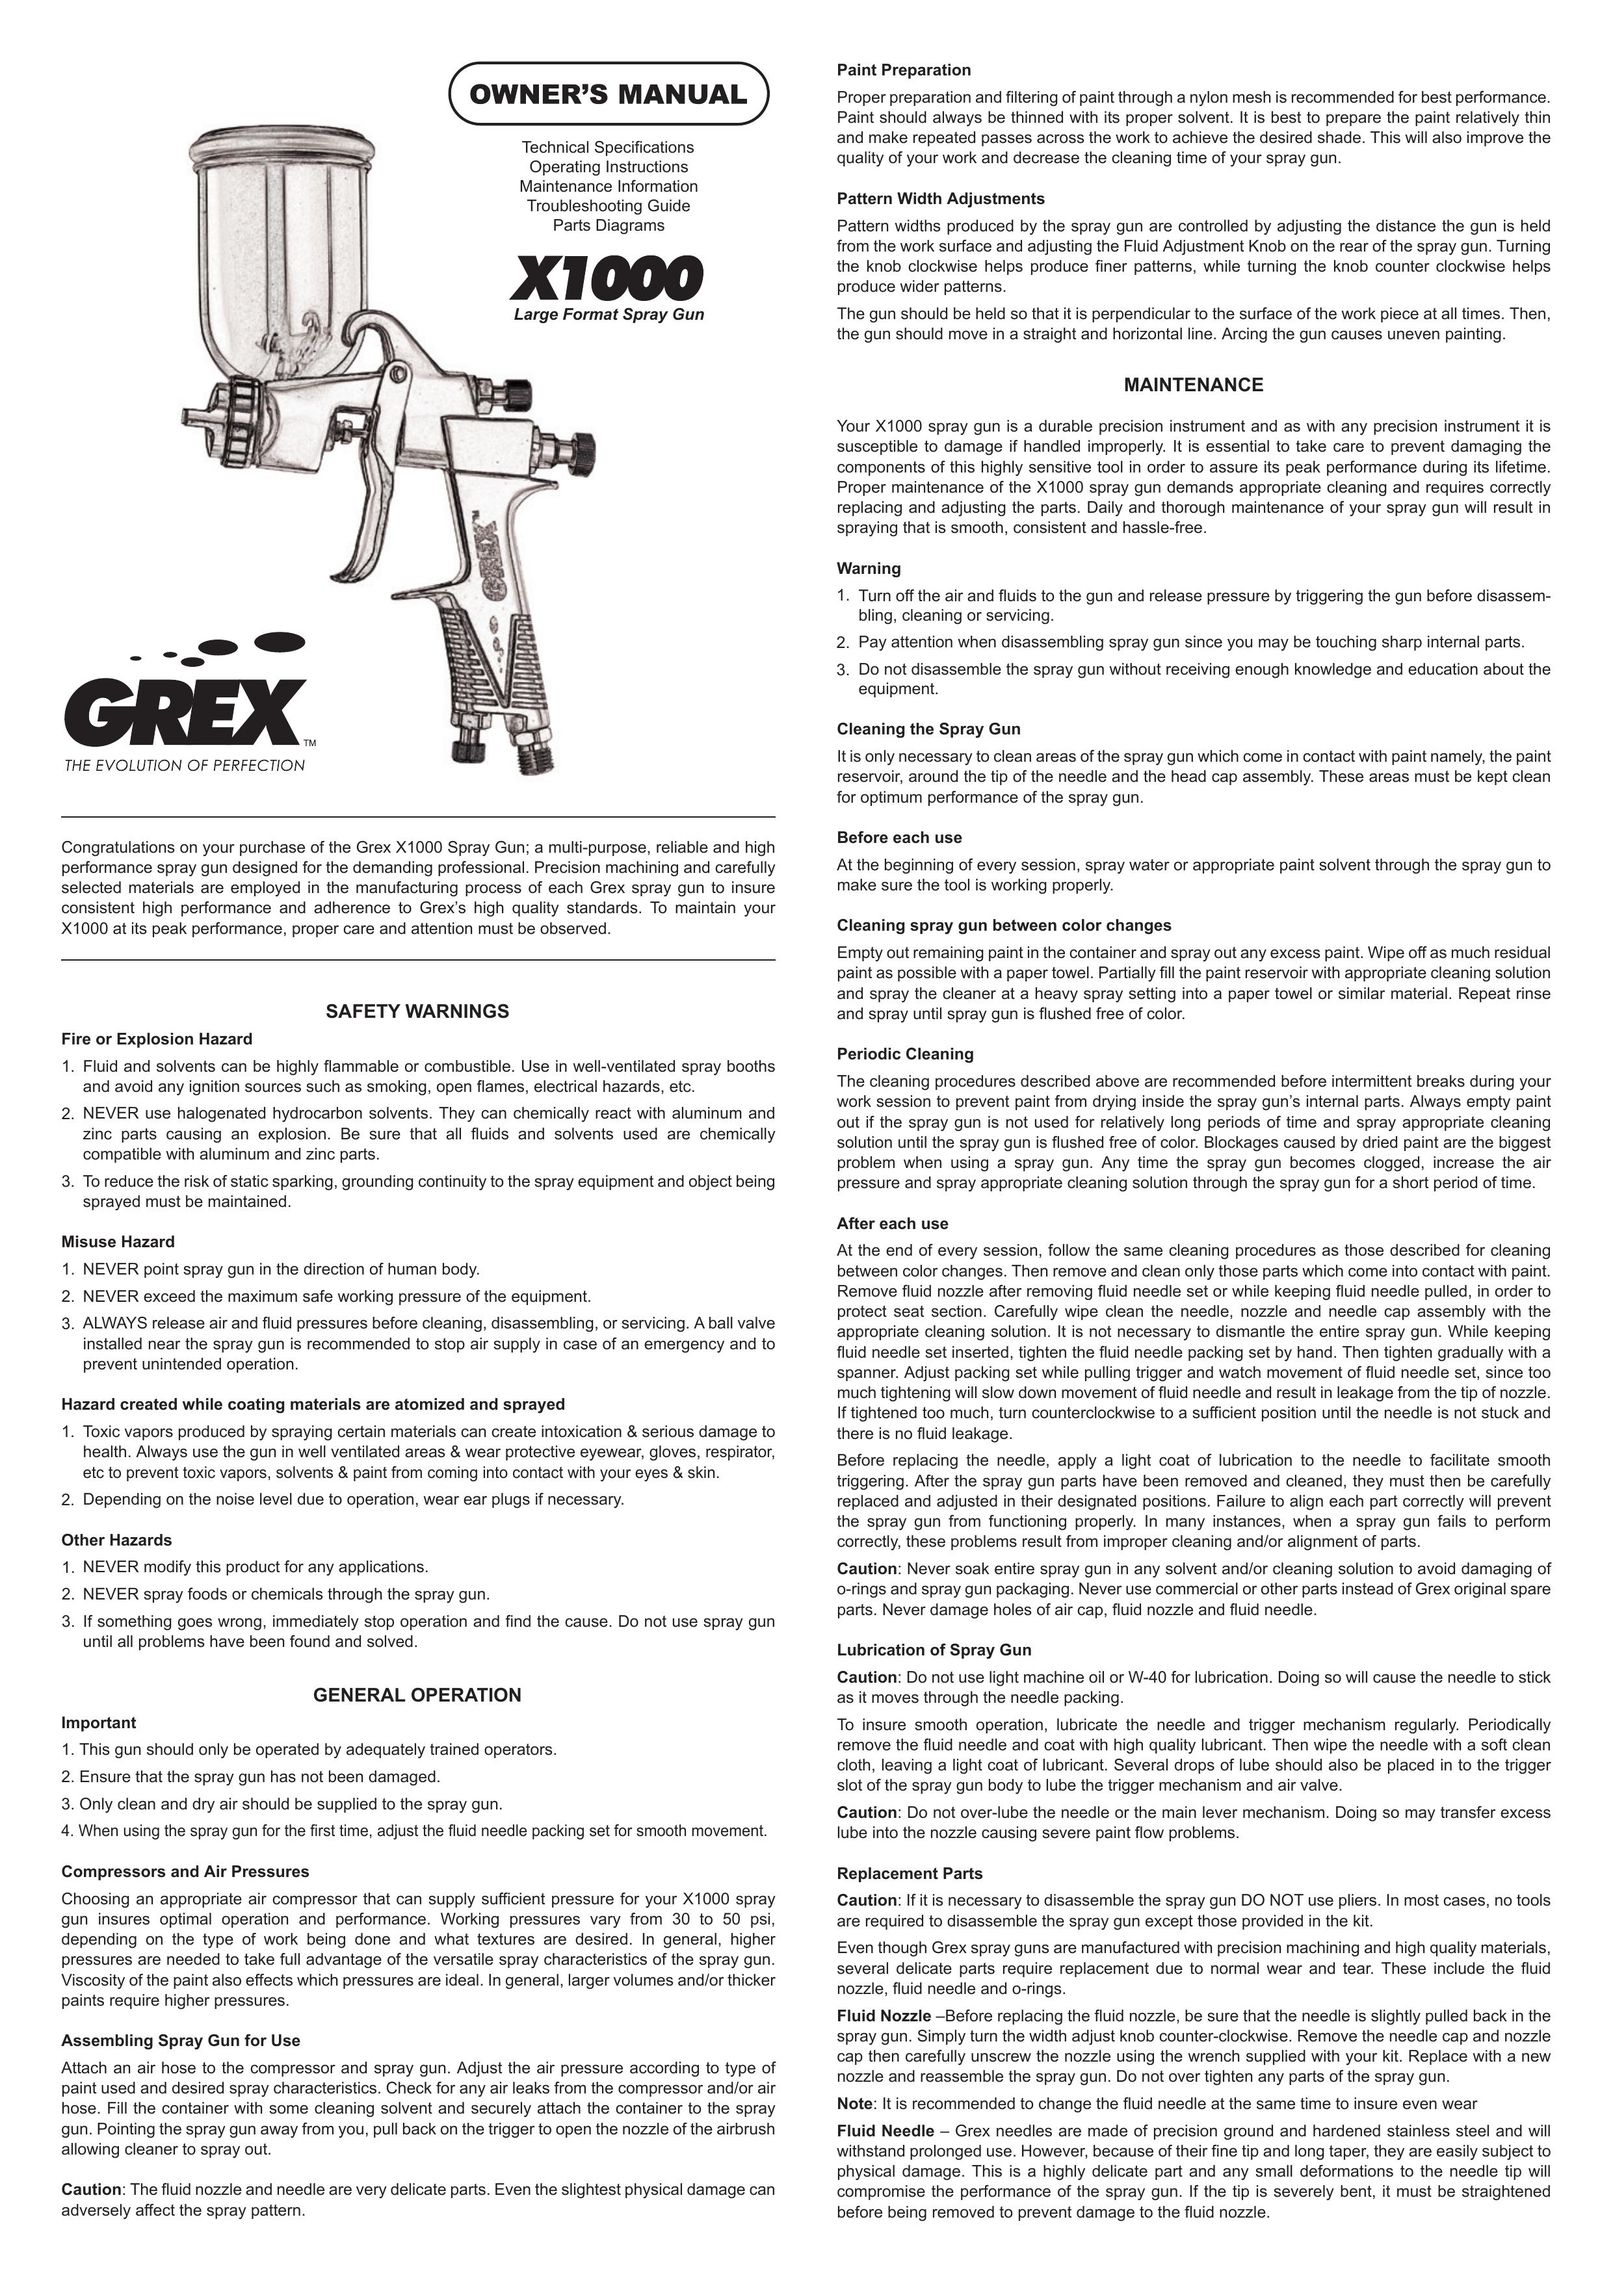 Grex Power Tools X1000 Paint Sprayer User Manual